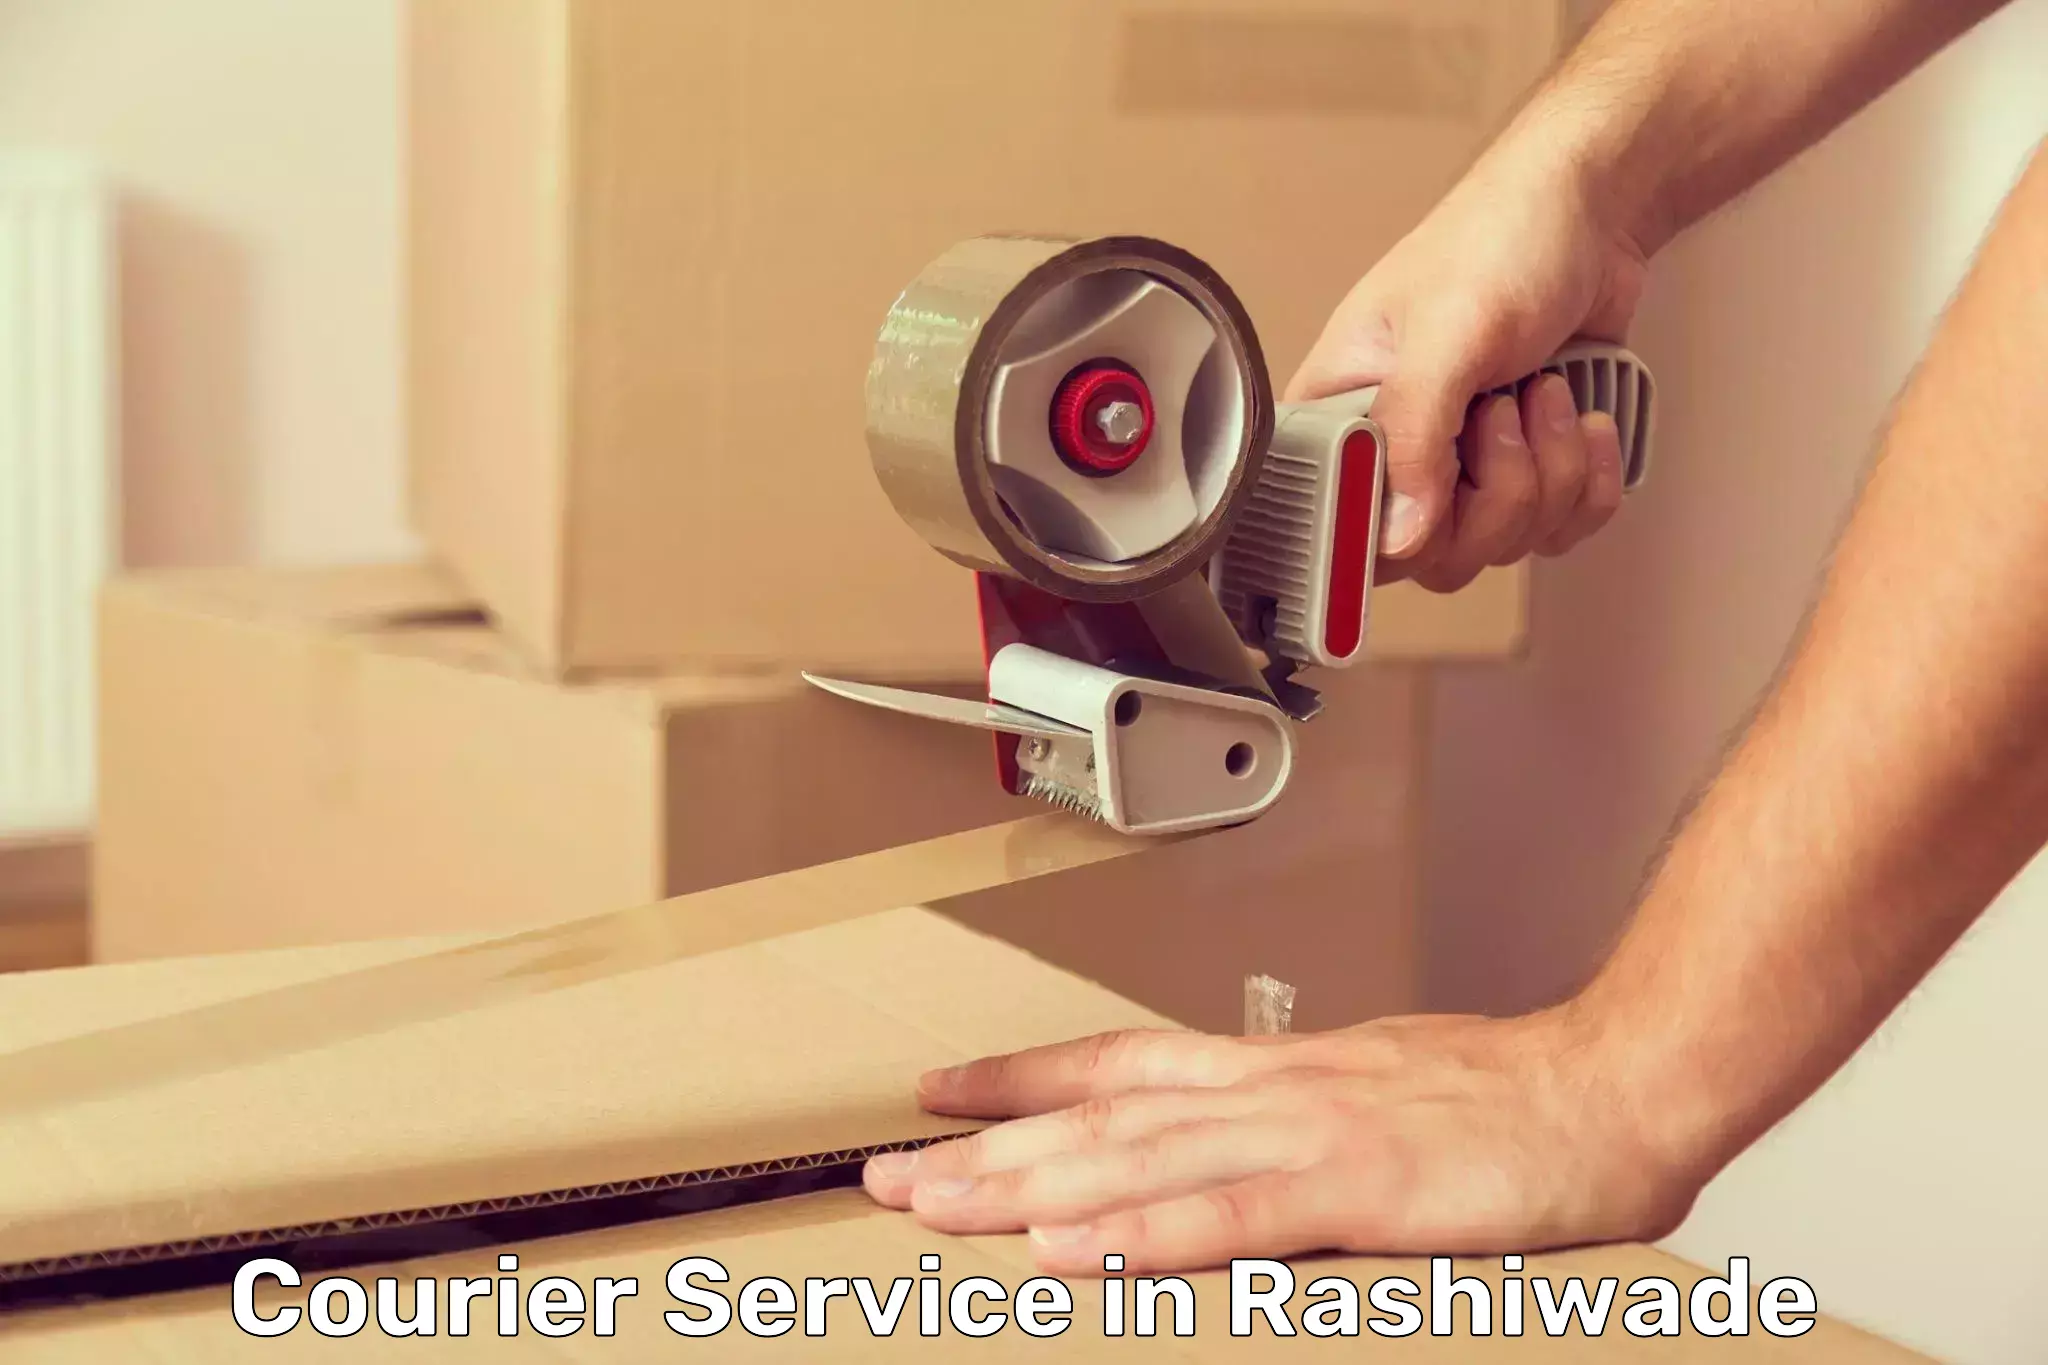 Supply chain efficiency in Rashiwade